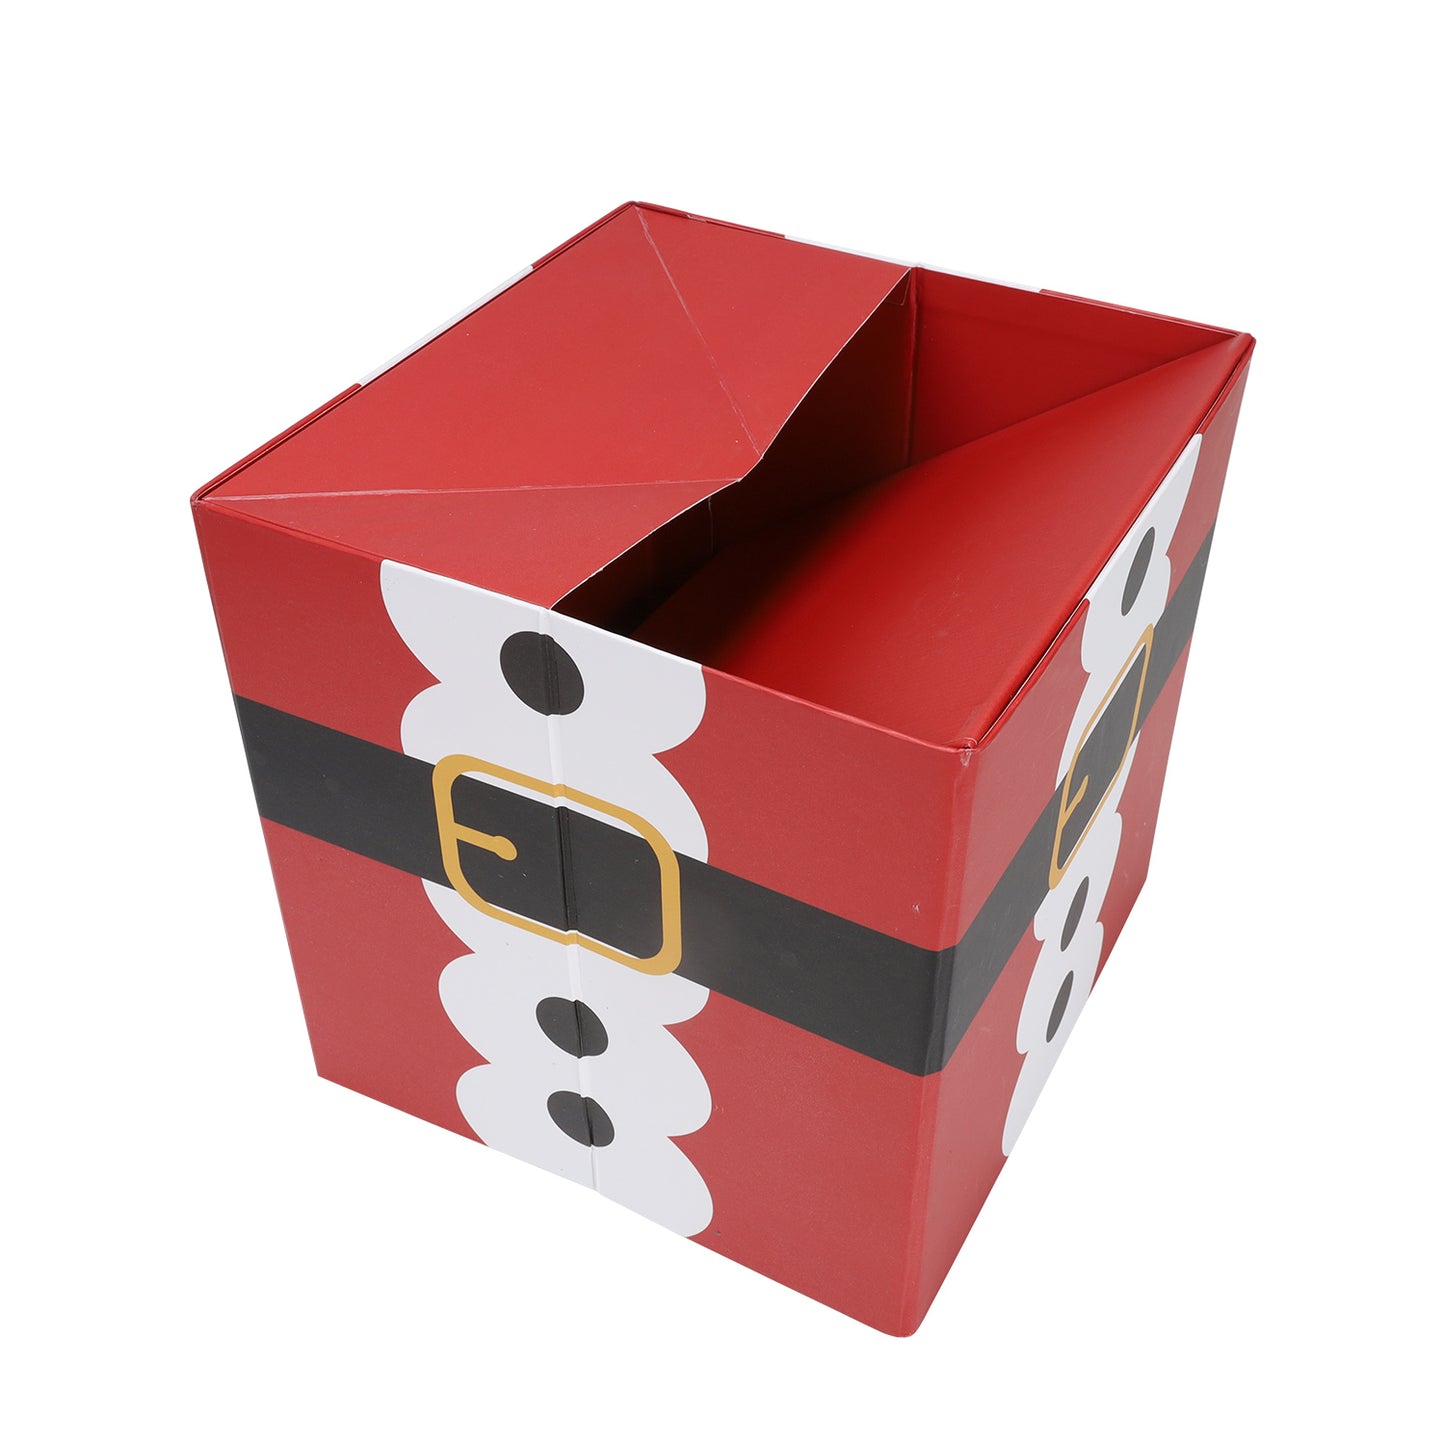 WRAPLA 23X23X23CM Christmas Gift Box with Lid Santa for Party, Wedding, Gift Wrap, Bridesmaid Proposal, Storage